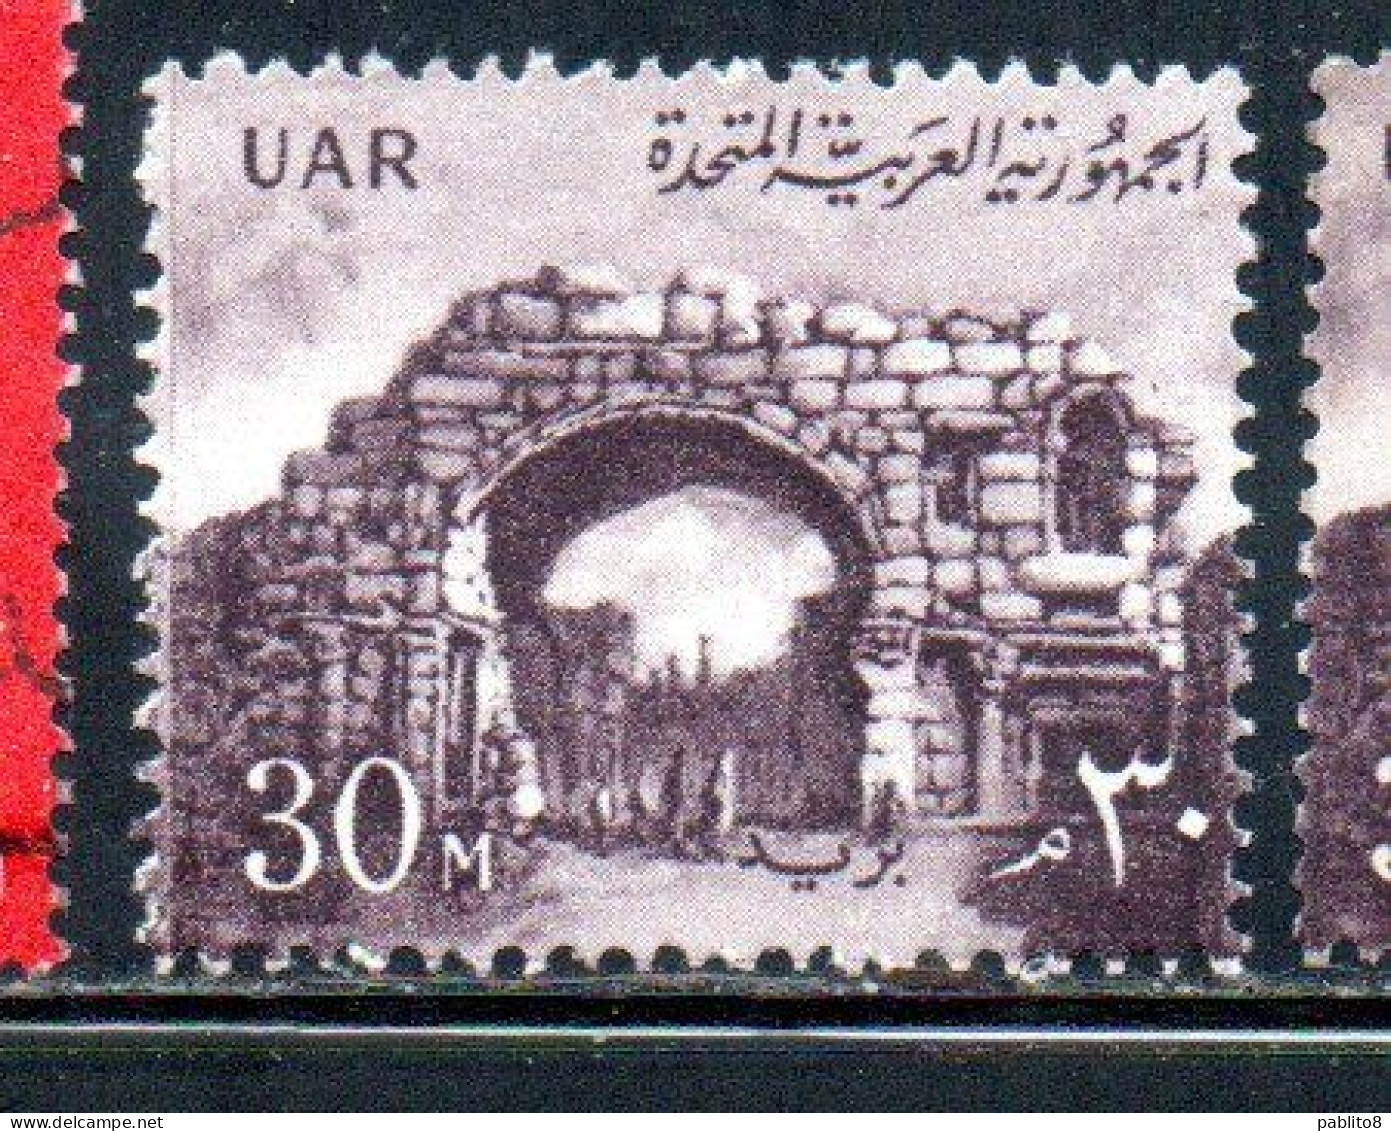 UAR EGYPT EGITTO 1959 1960 ST. SIMON'S GATE BOSRA SYRIA  30m MNH - Unused Stamps